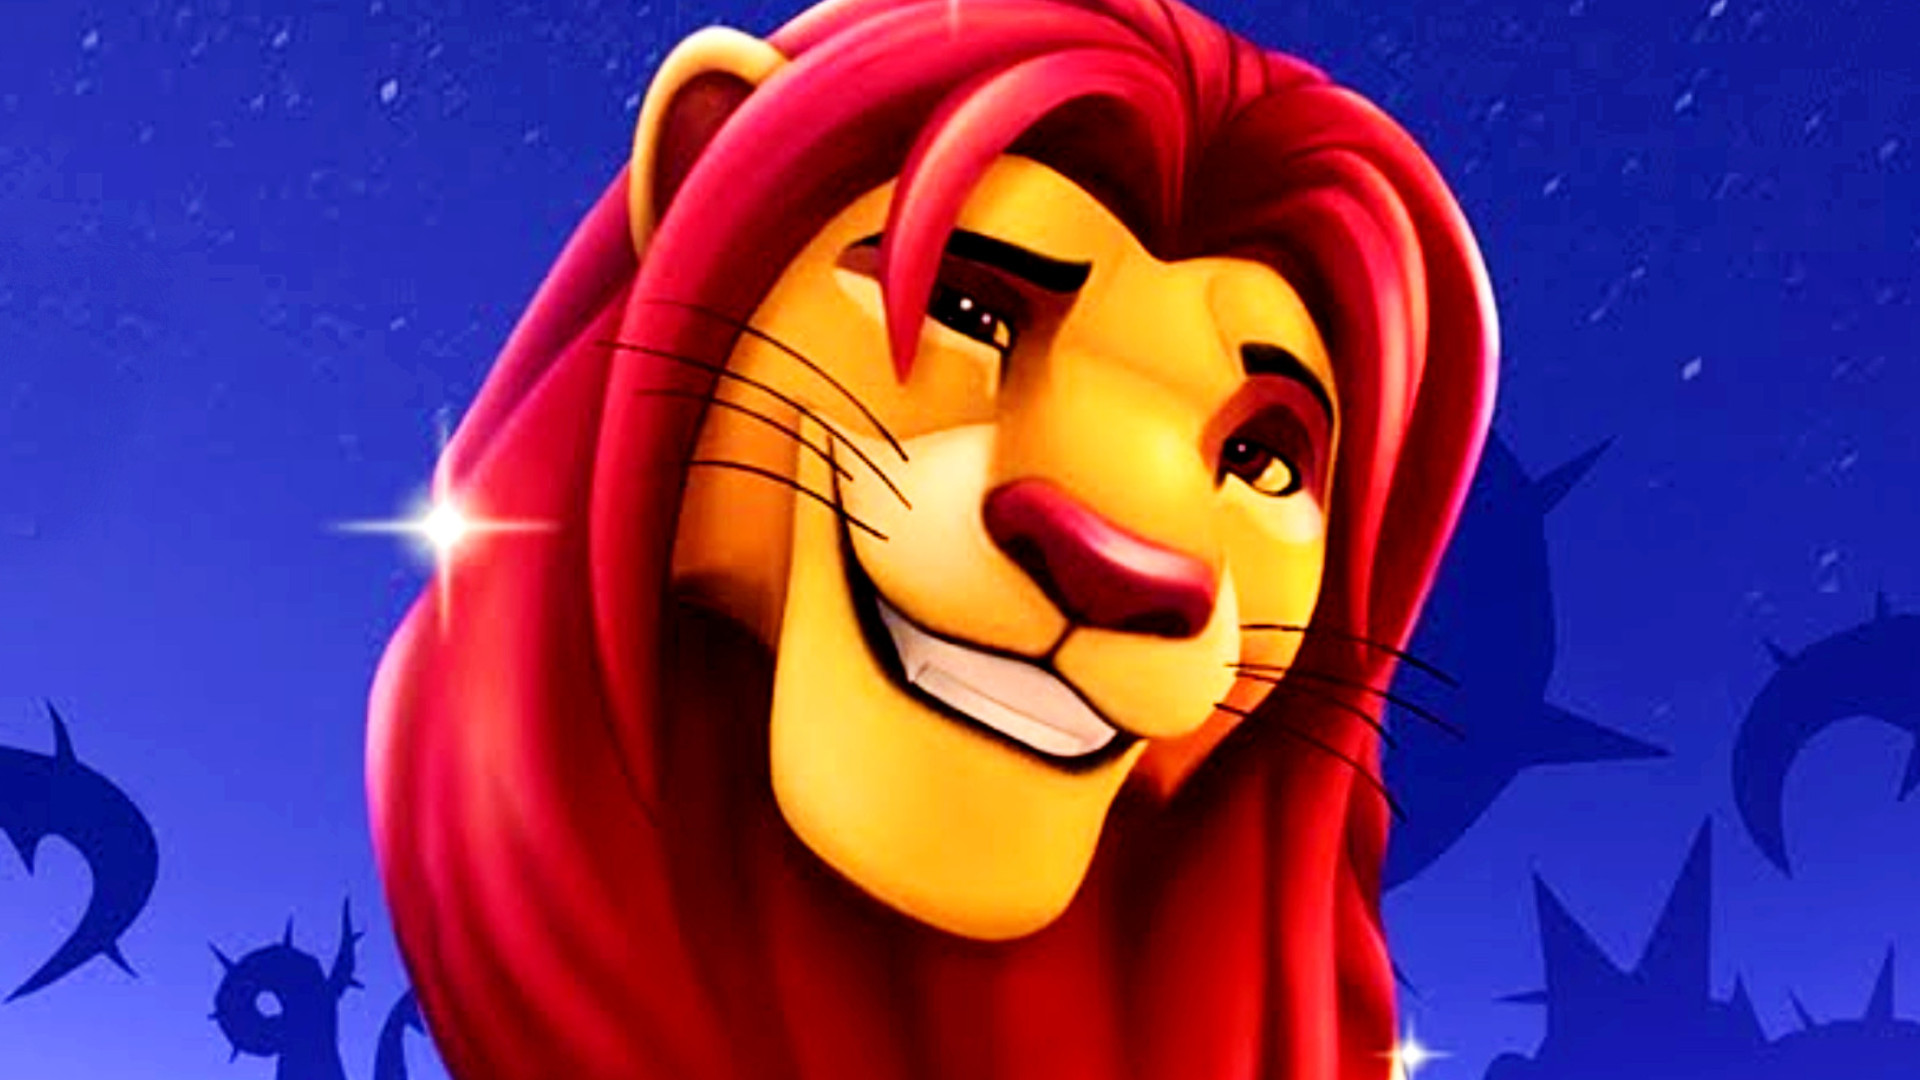 The Disney Dreamlight Valley Lion King update arrives next week